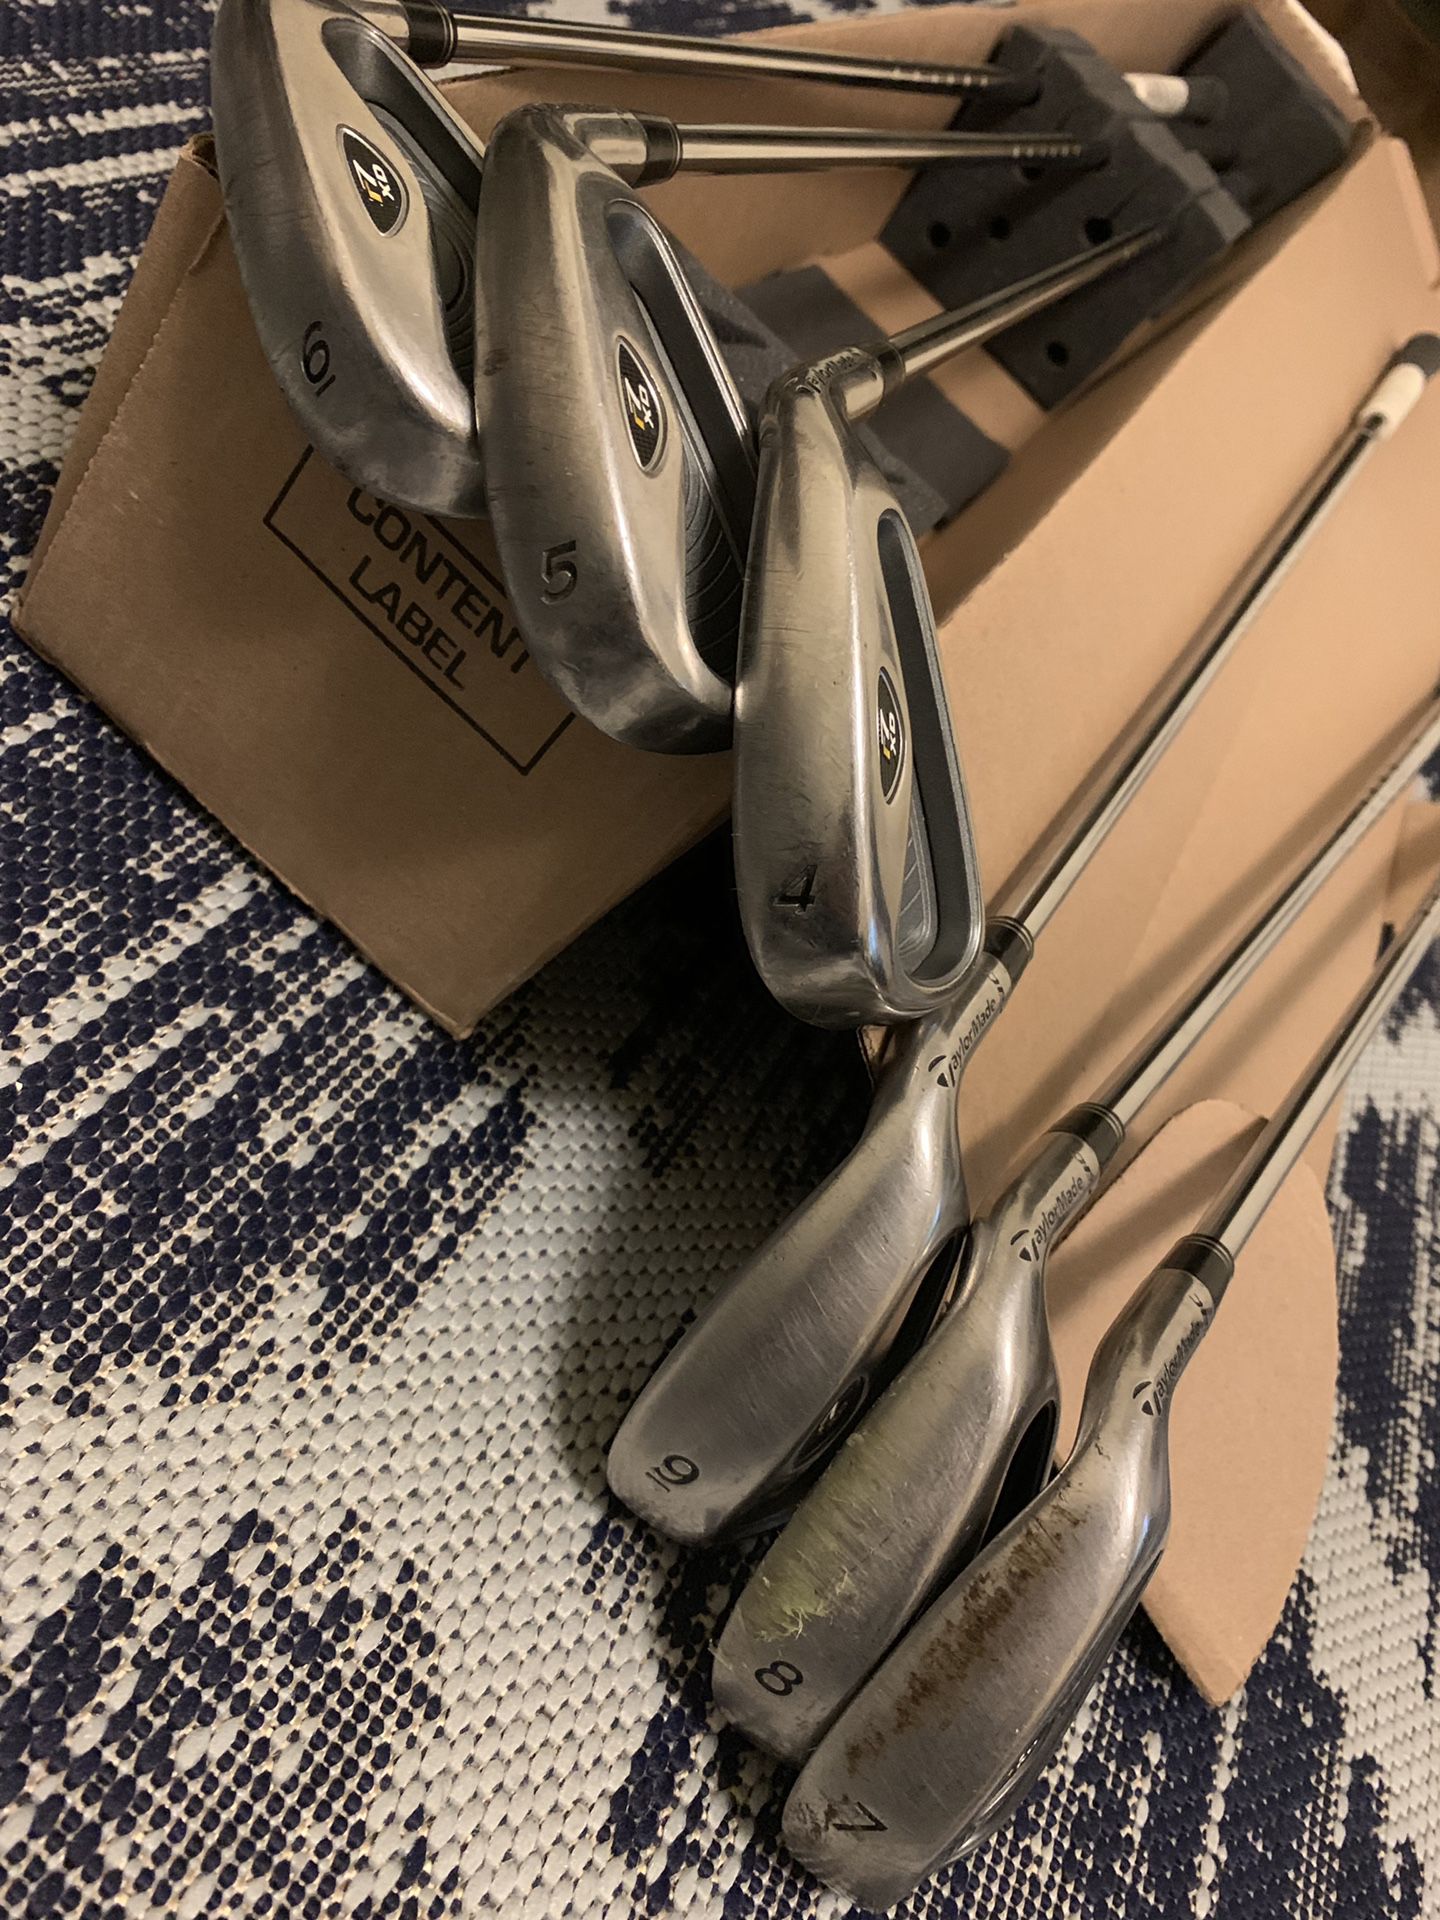 TaylorMade R7 XD iron set golf clubs 4-9